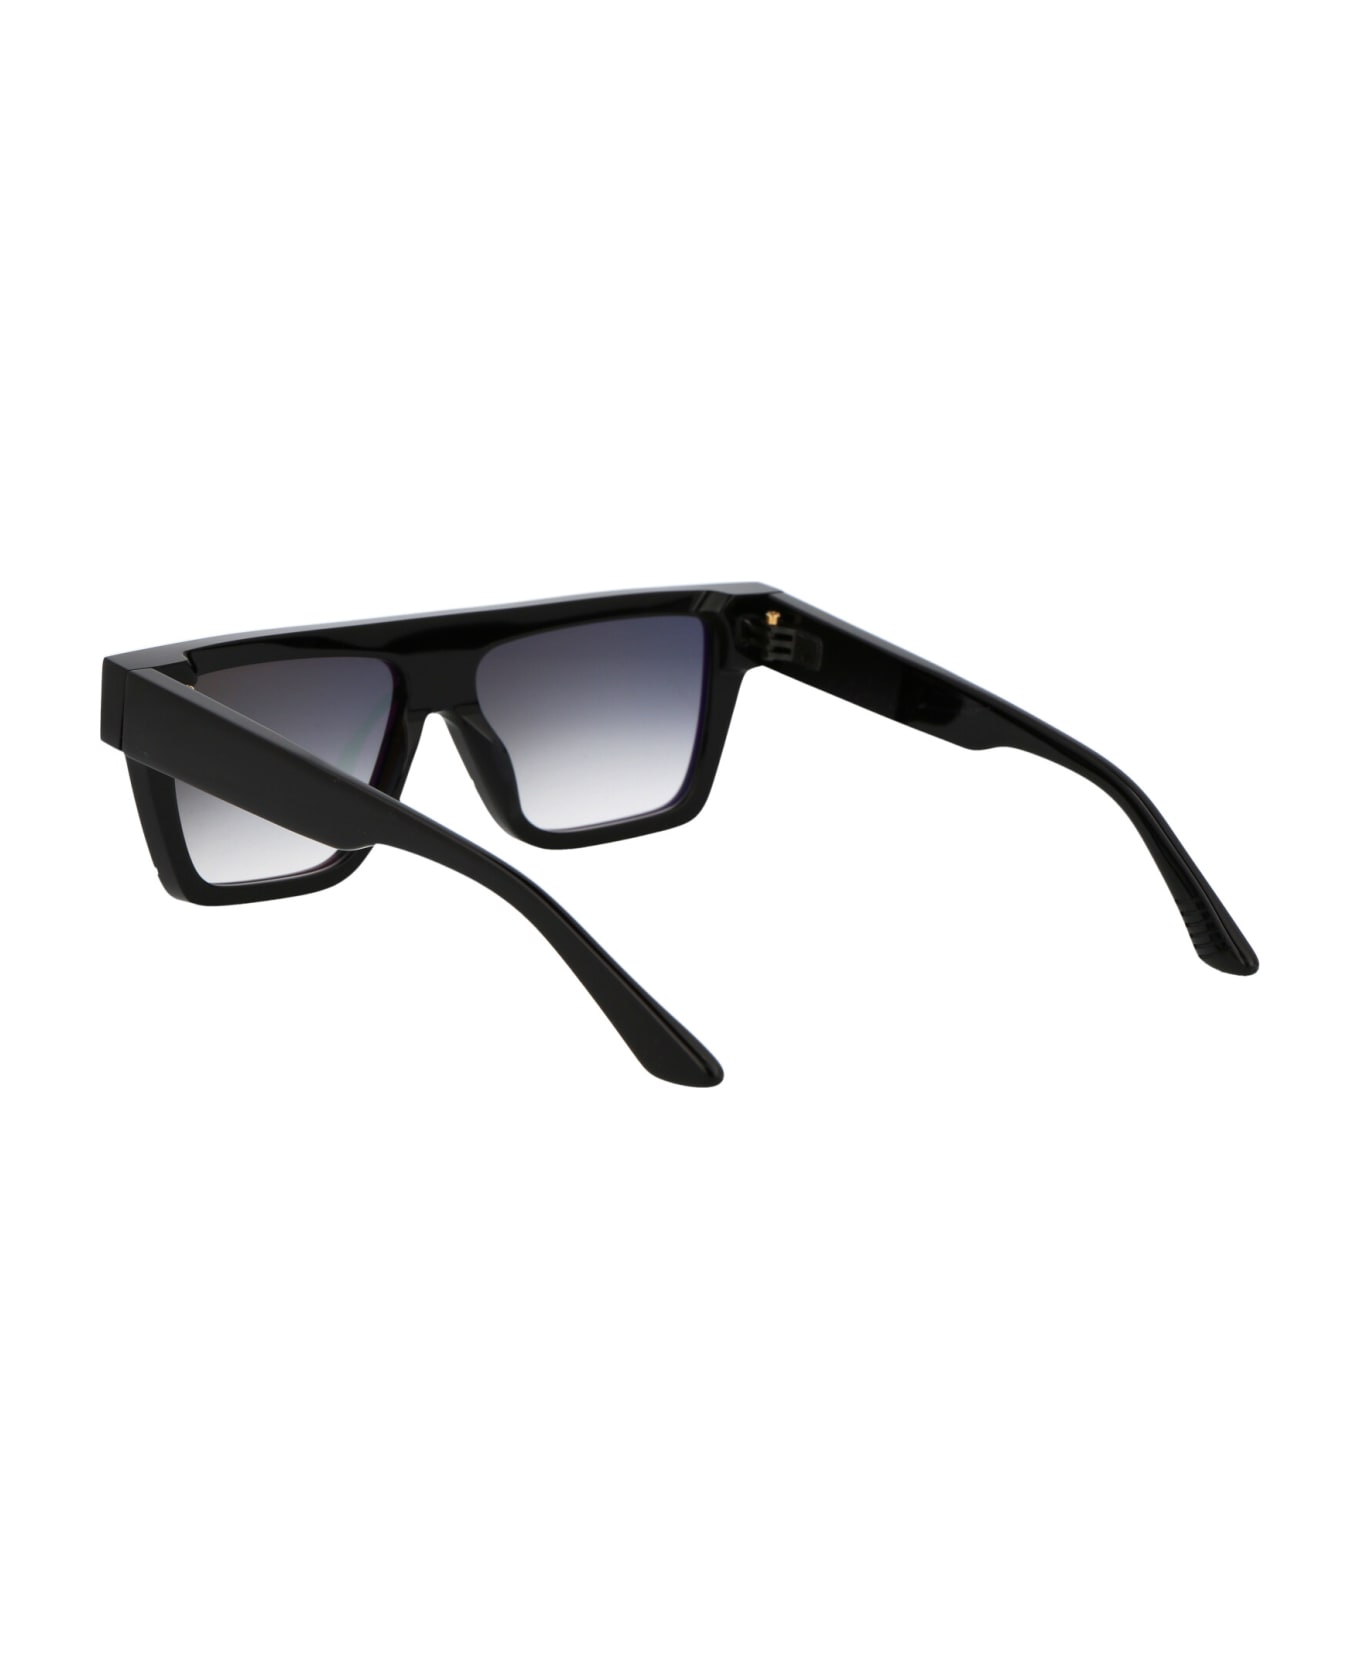 Yohji Yamamoto Slook 002 Sunglasses - A001 PURE BLACK/JAPAN GOLD